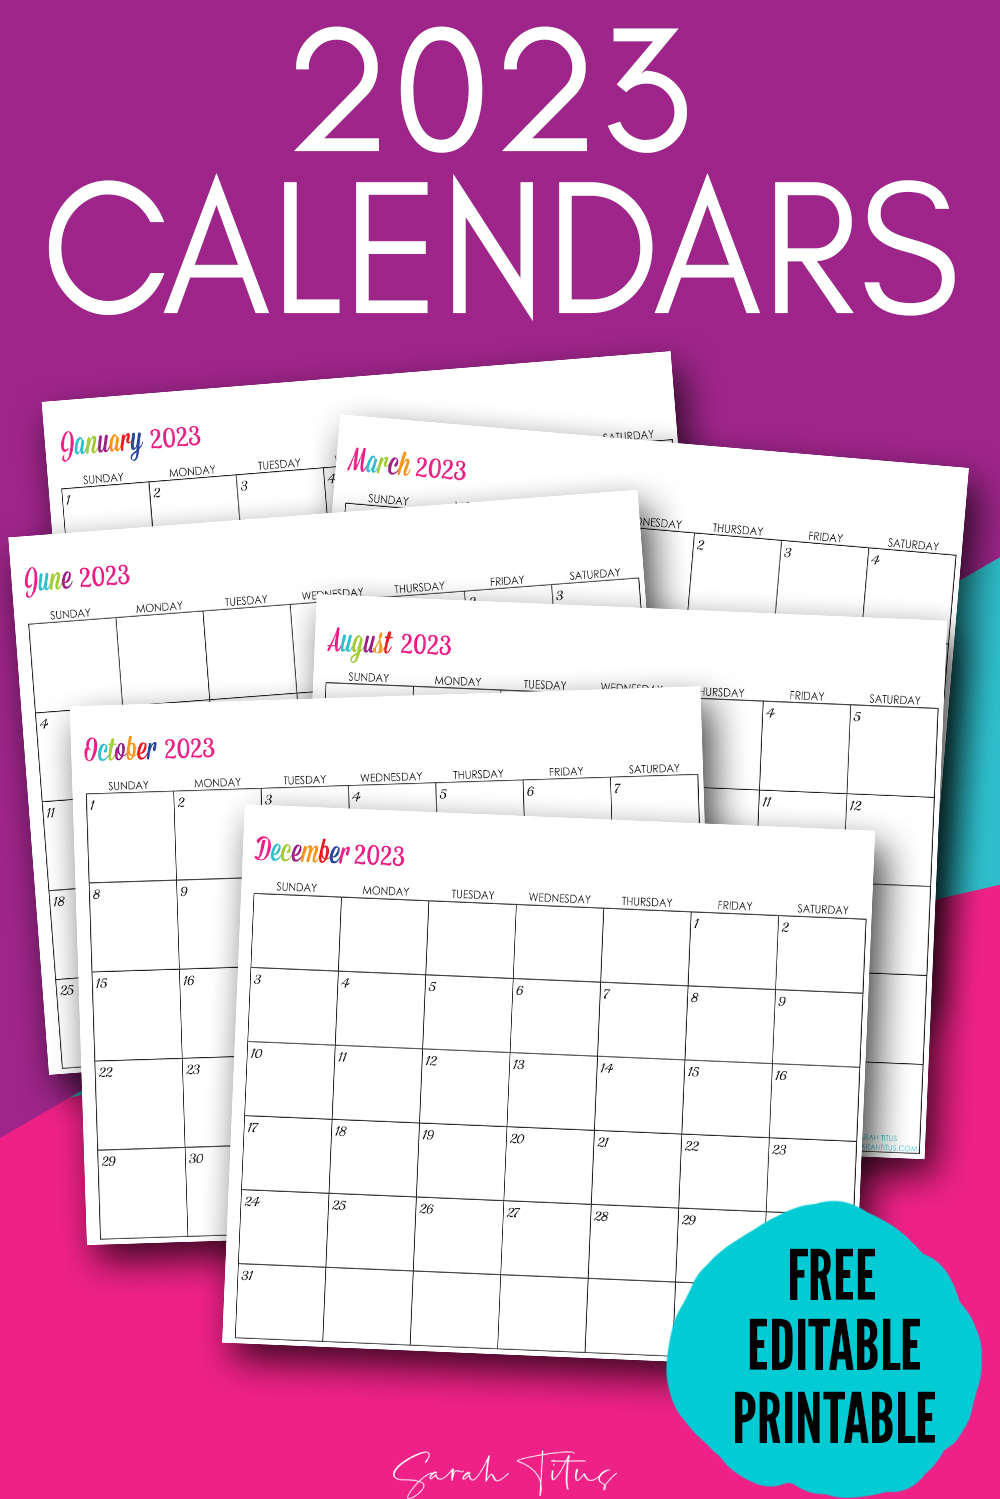 Custom Editable 2020 Free Printable Calendars - Sarah Titus | From